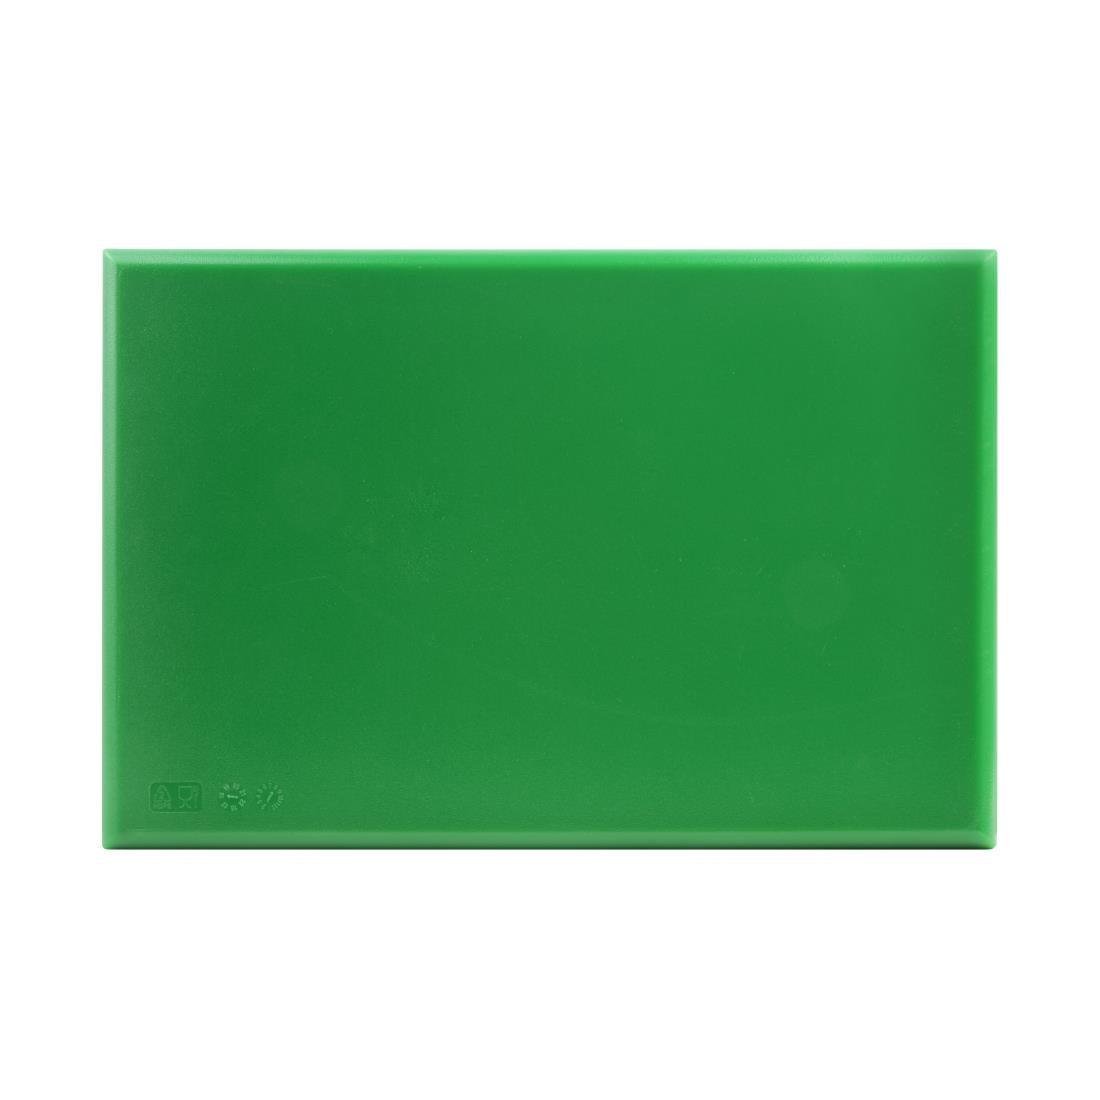 Hygiplas J037 EDLP - Hygiplas High Density Chopping Board Green - 18x12x1" - HospoStore